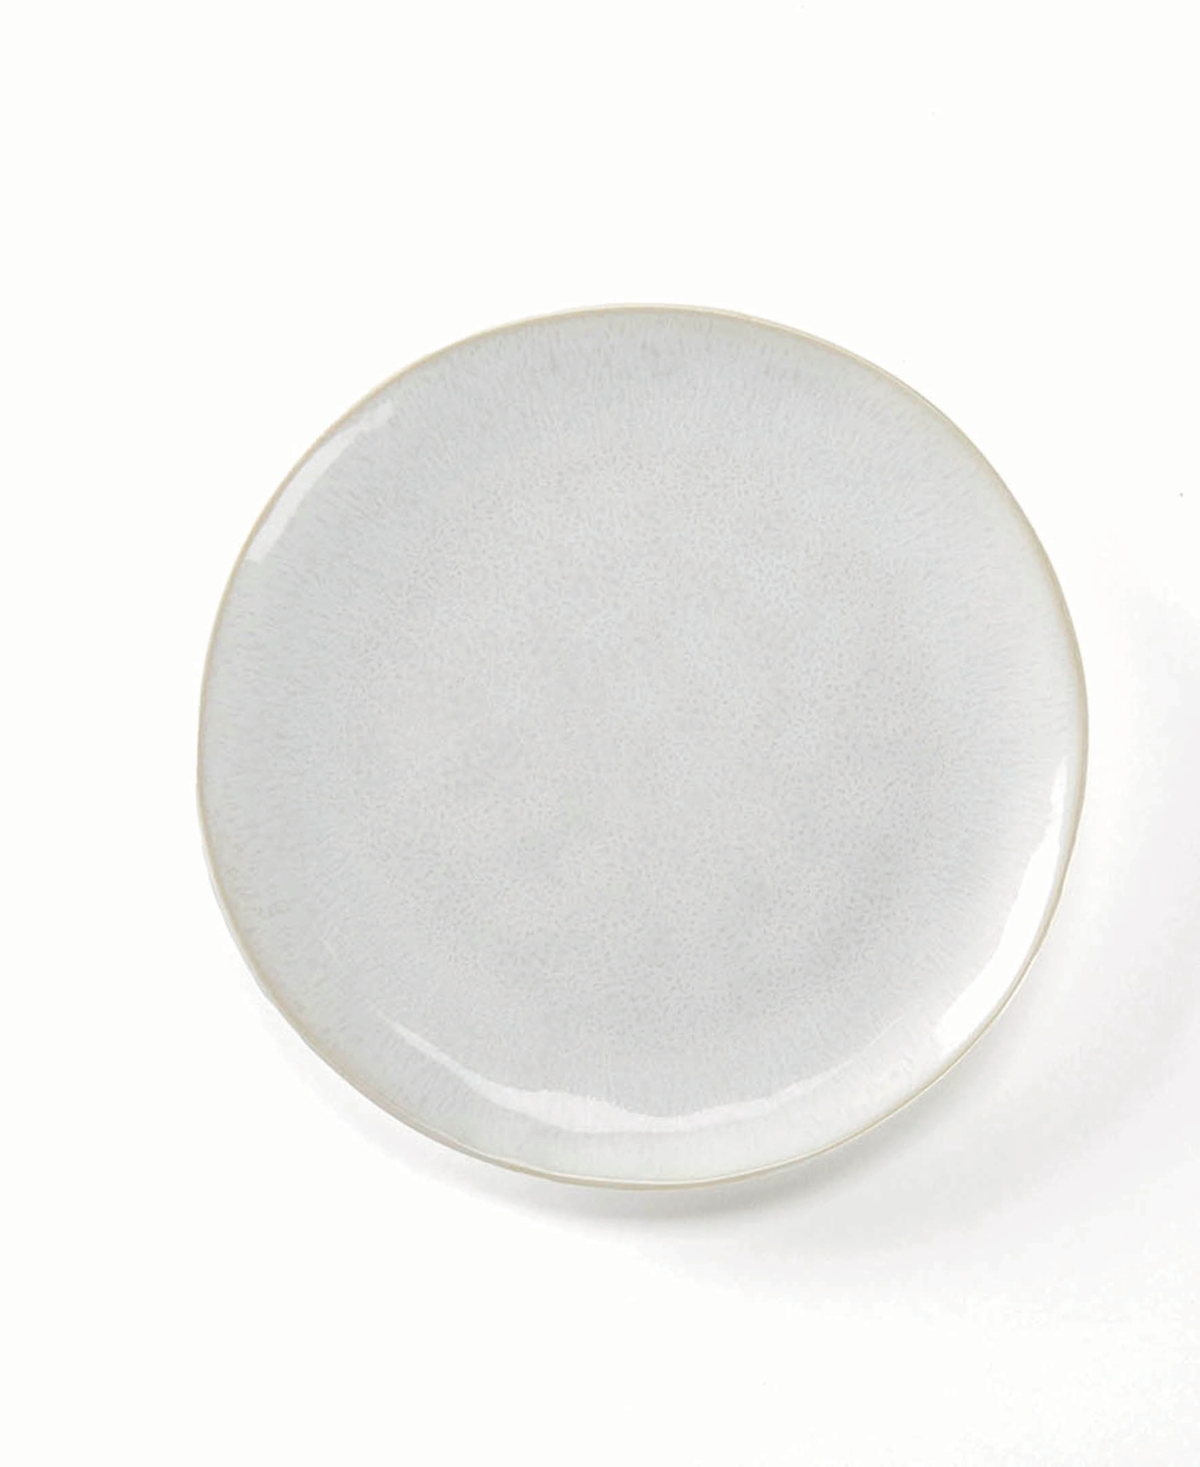 Margo Salad Plates, Set of 4 - White